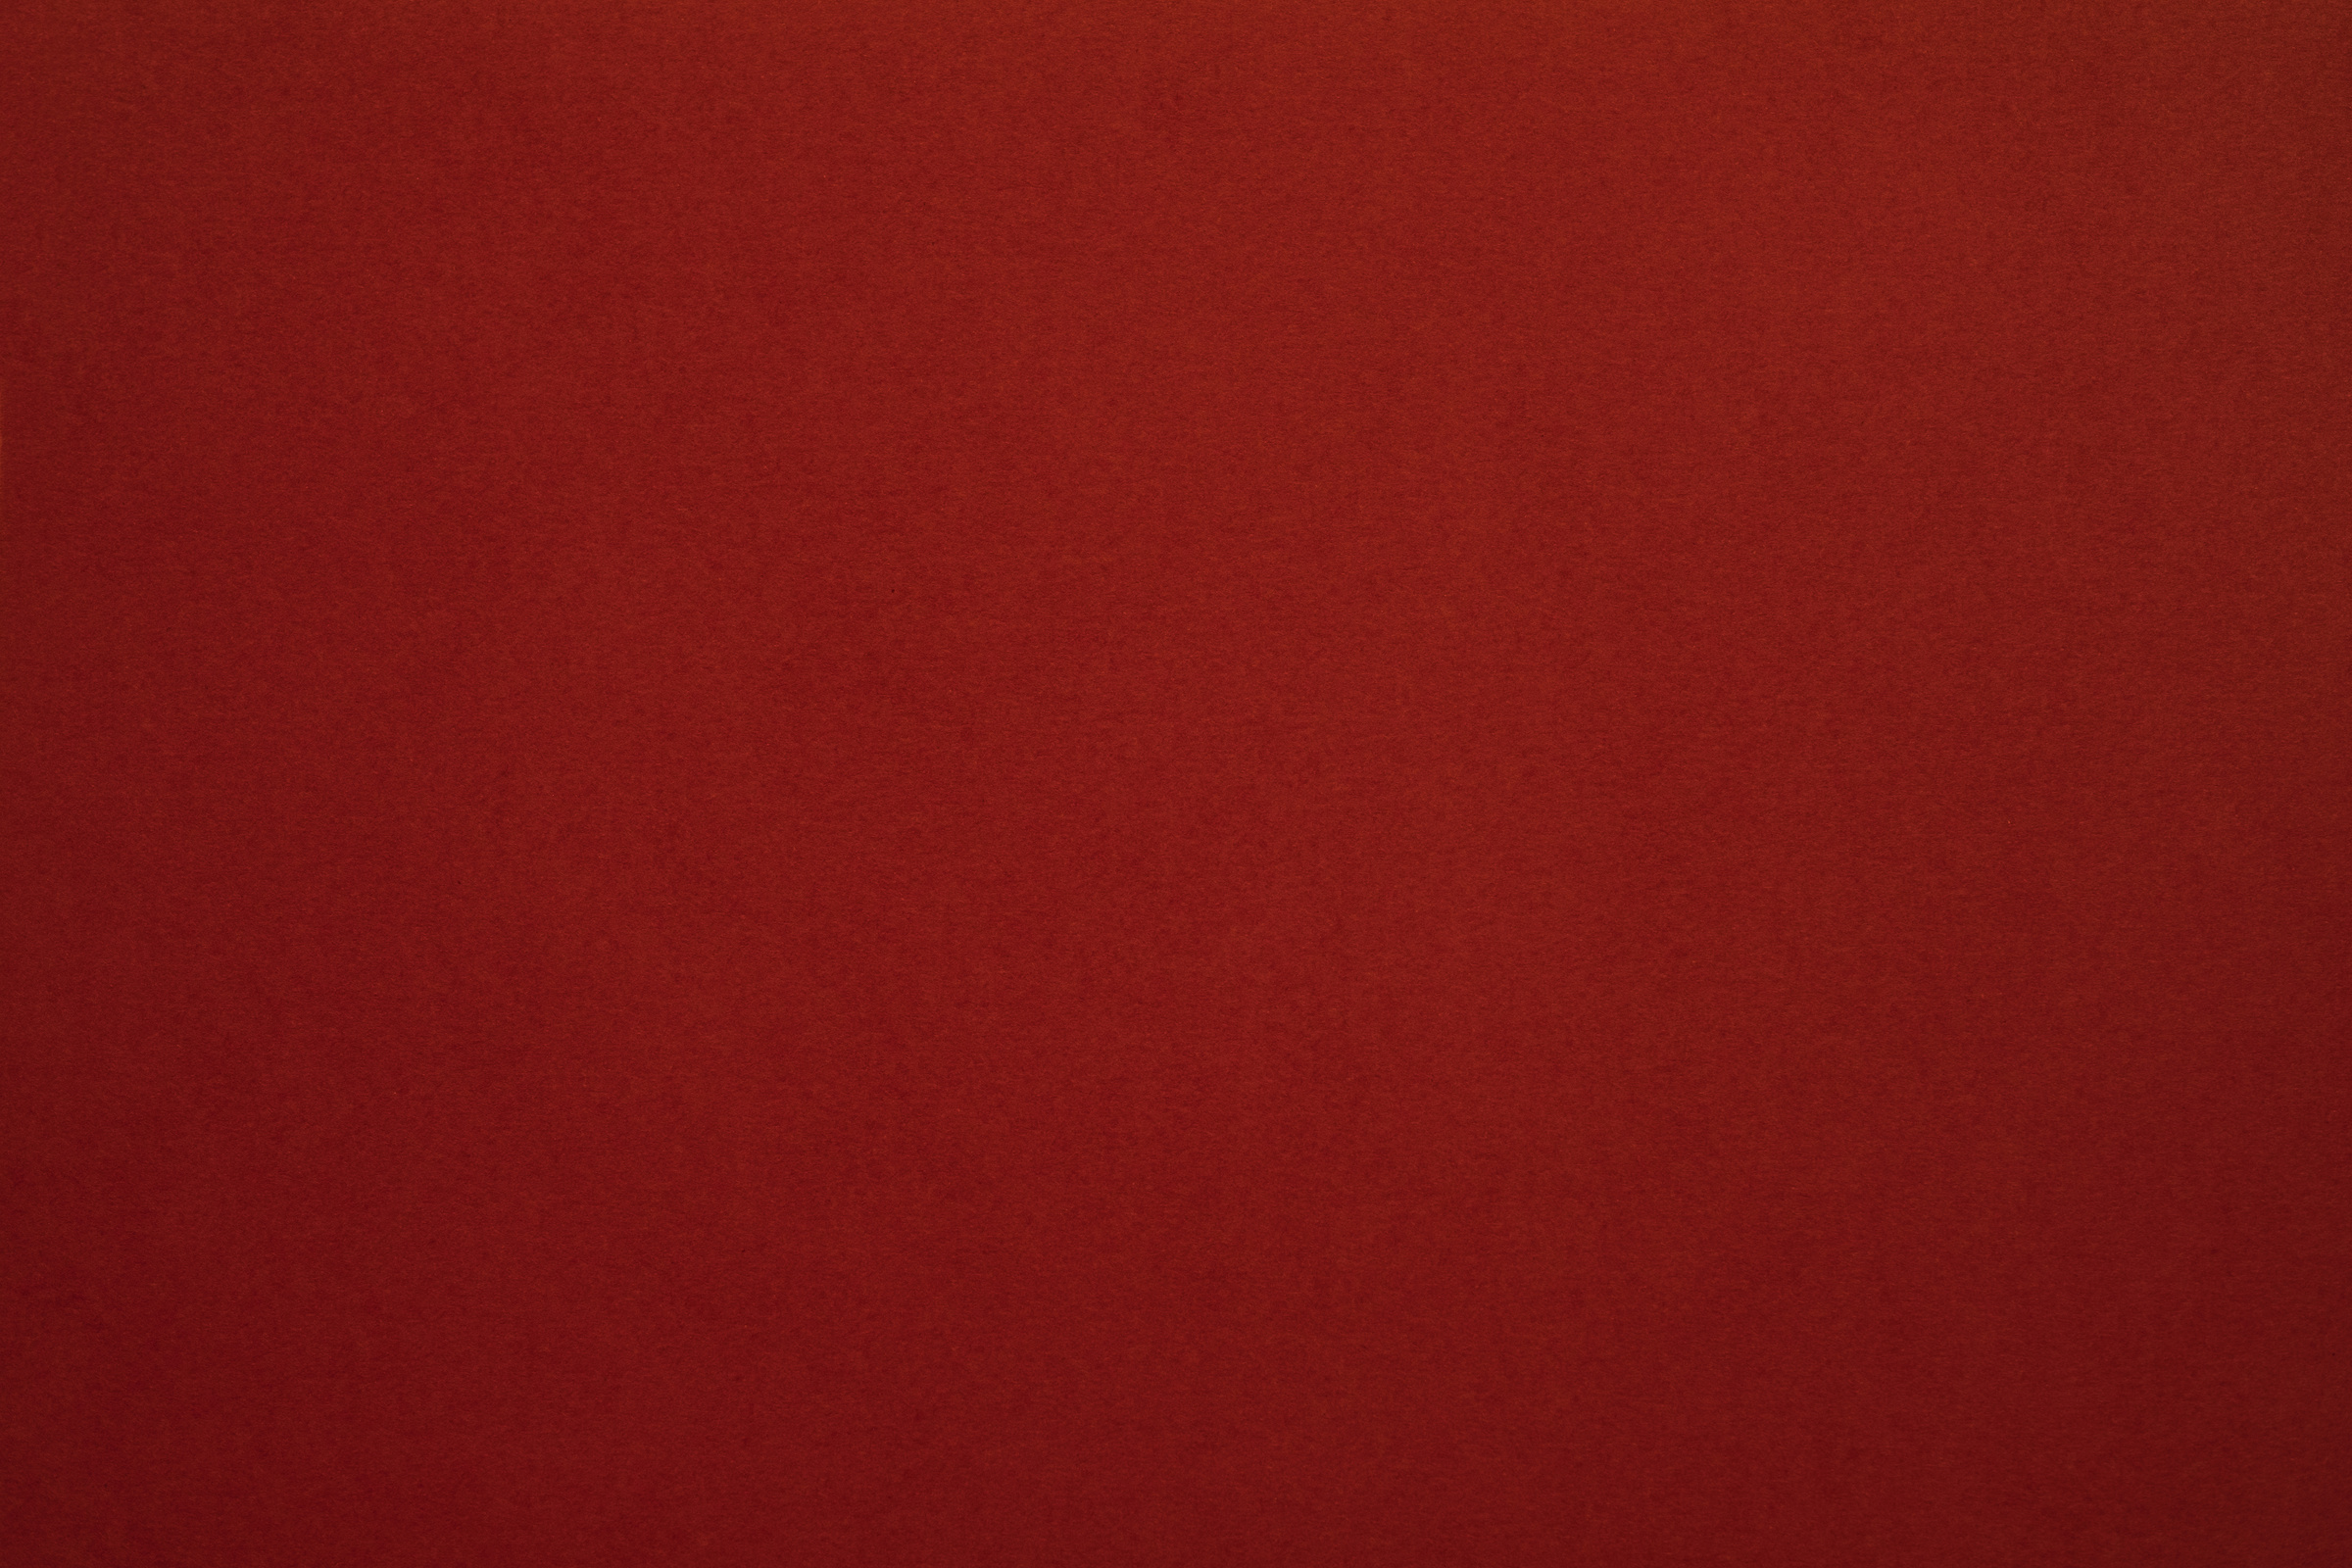 maroon red felt texture art background paper